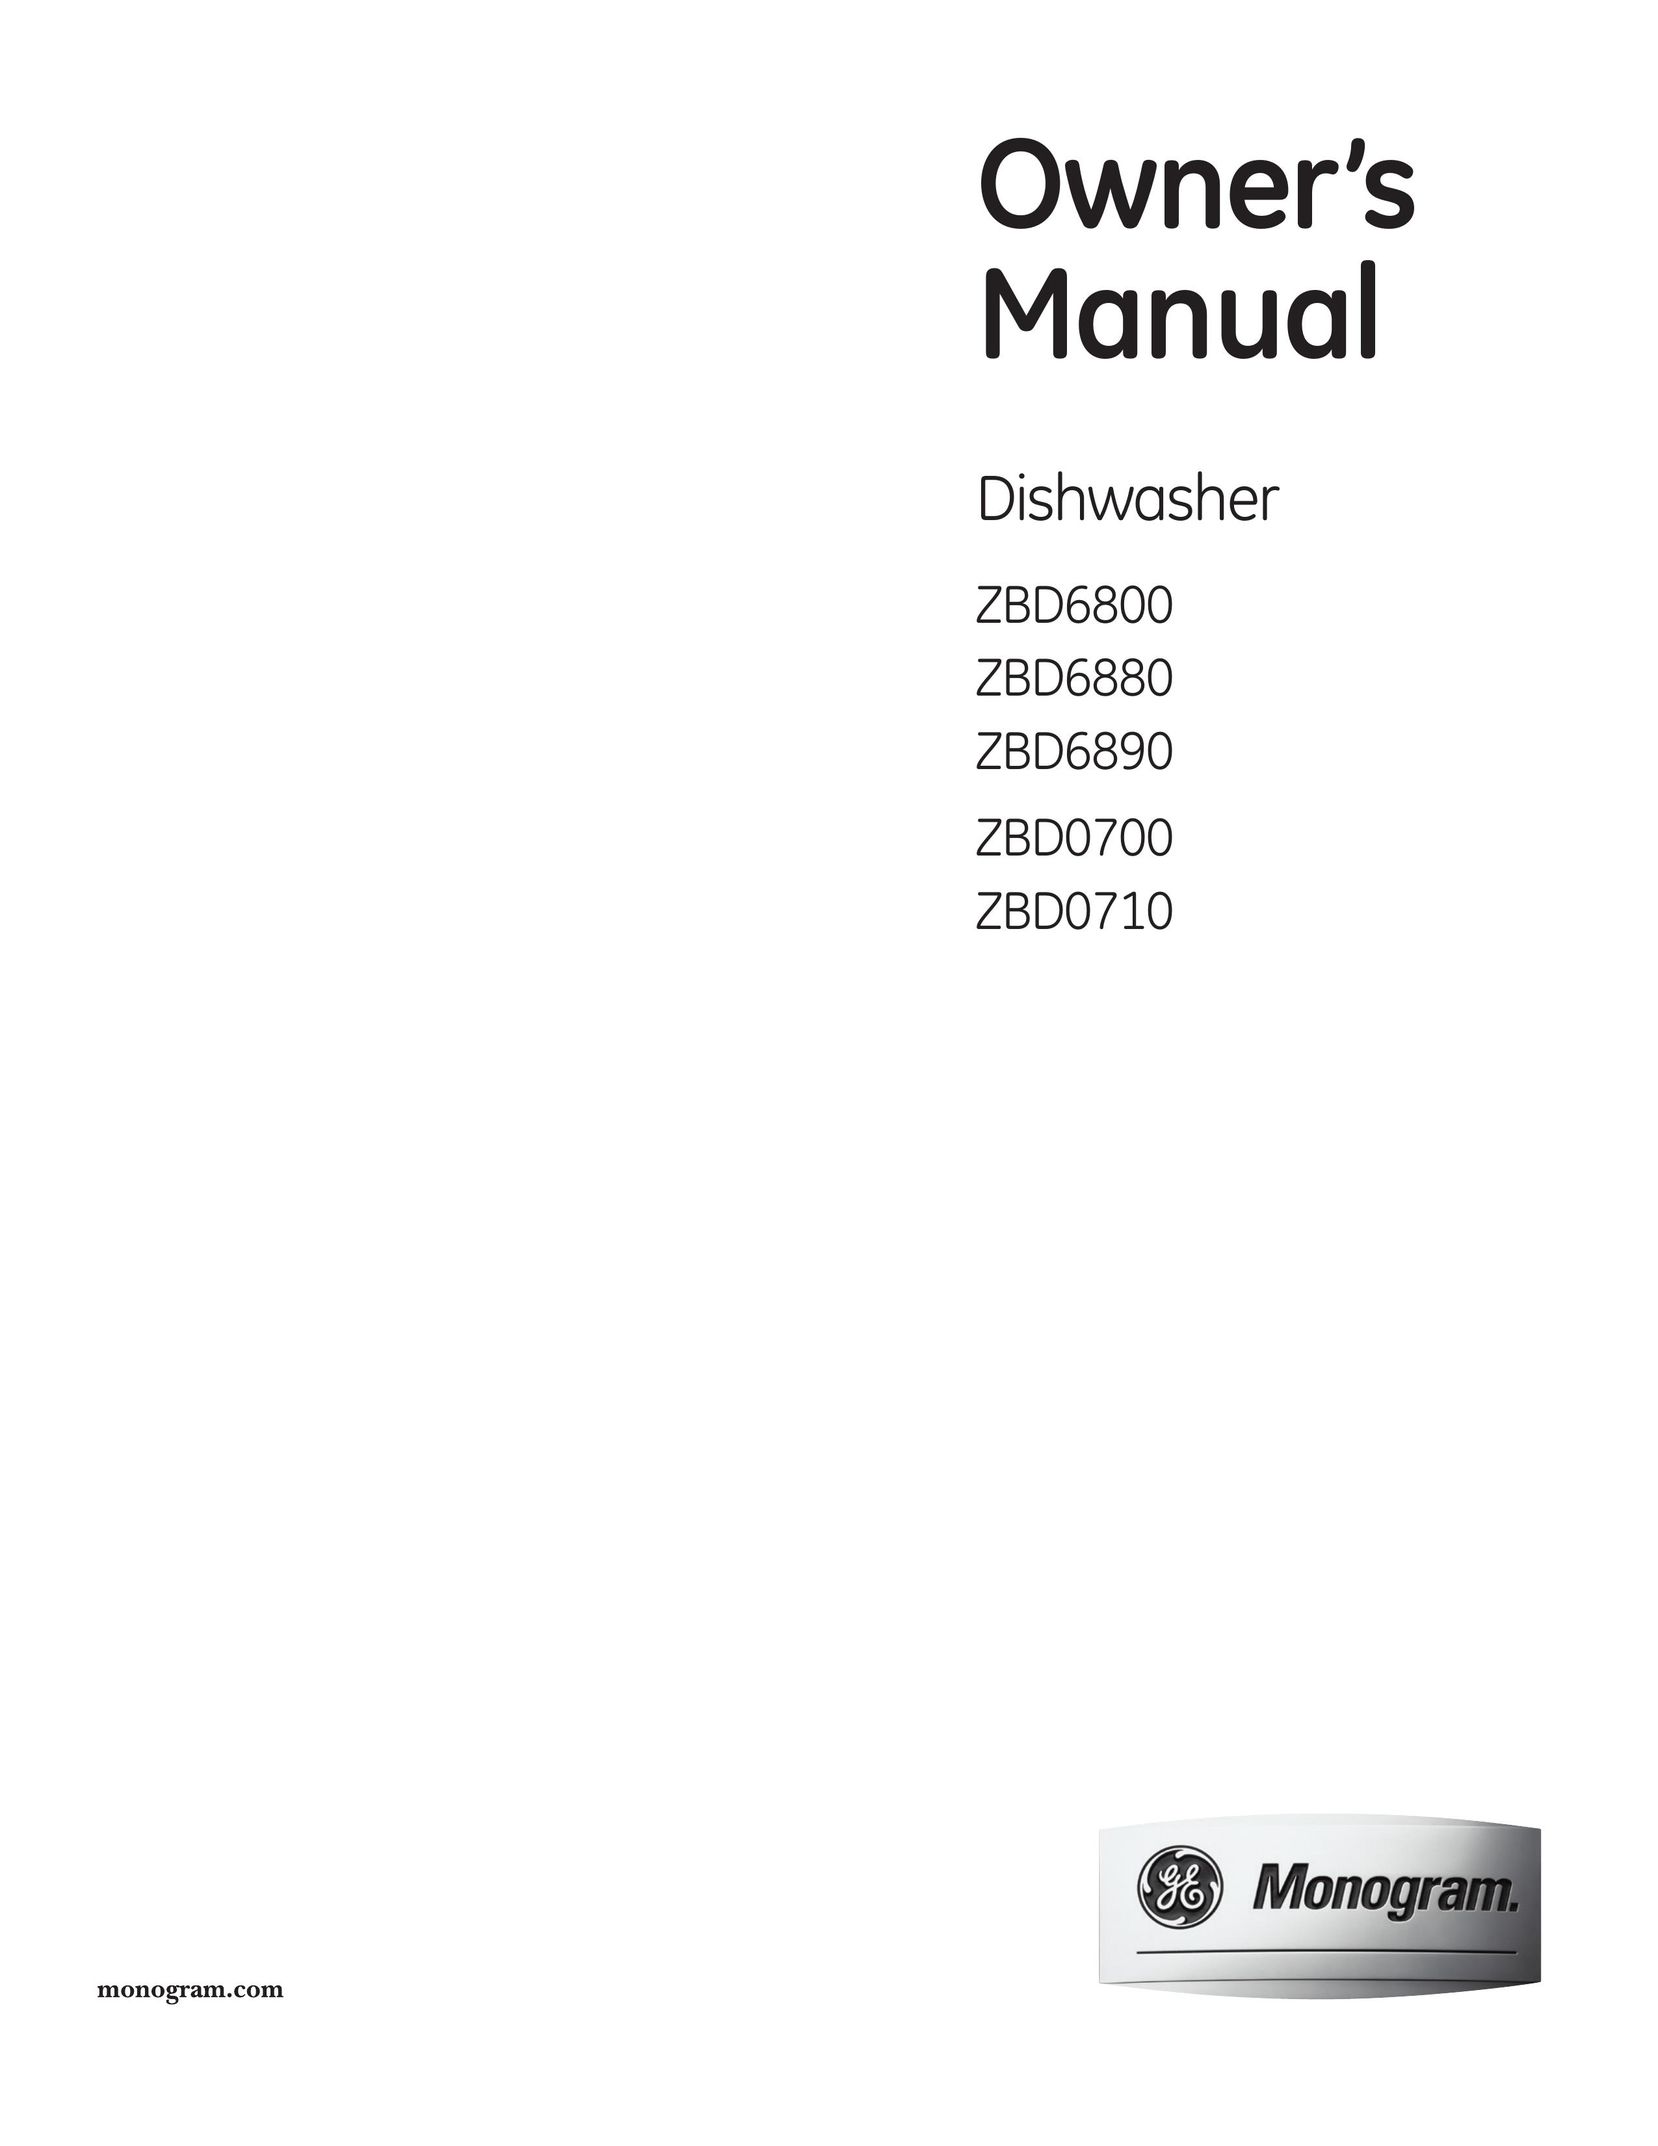 GE Monogram ZBD6800, ZBD6880, ZBD6890, ZBD0700, ZBD0710 Dishwasher User Manual